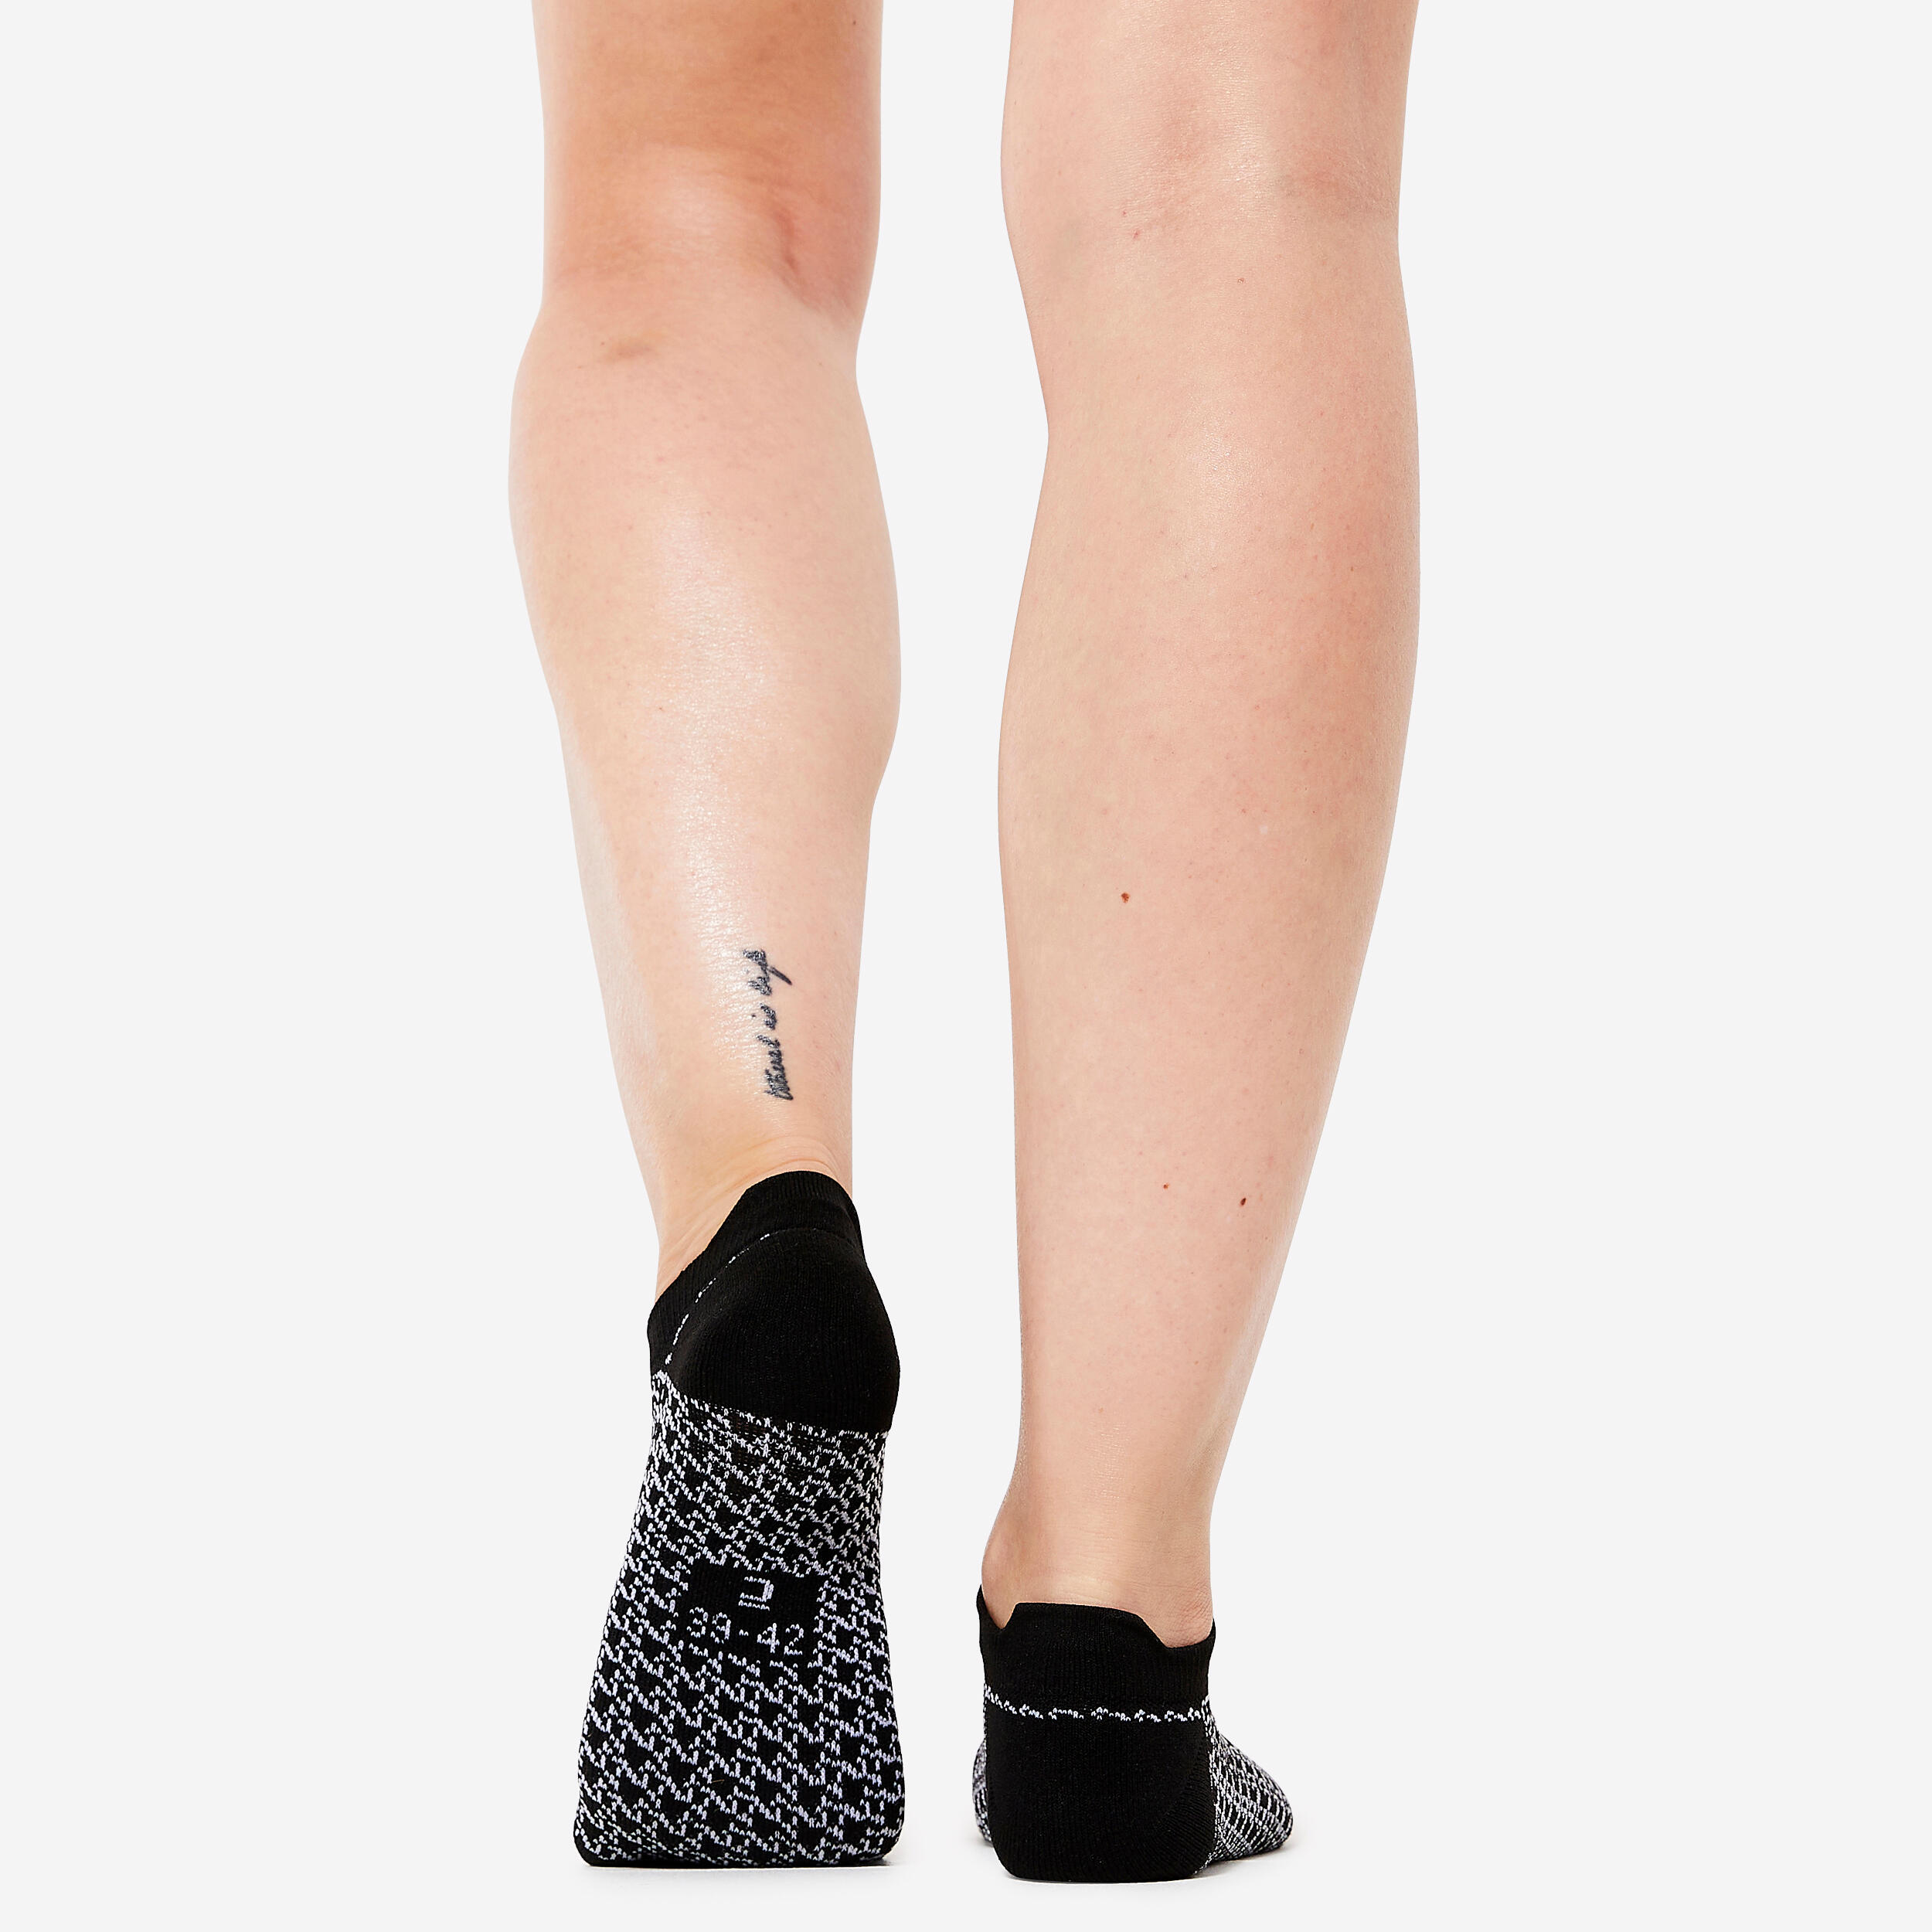 Women's Invisible Socks x 3 - Black & White 5/13